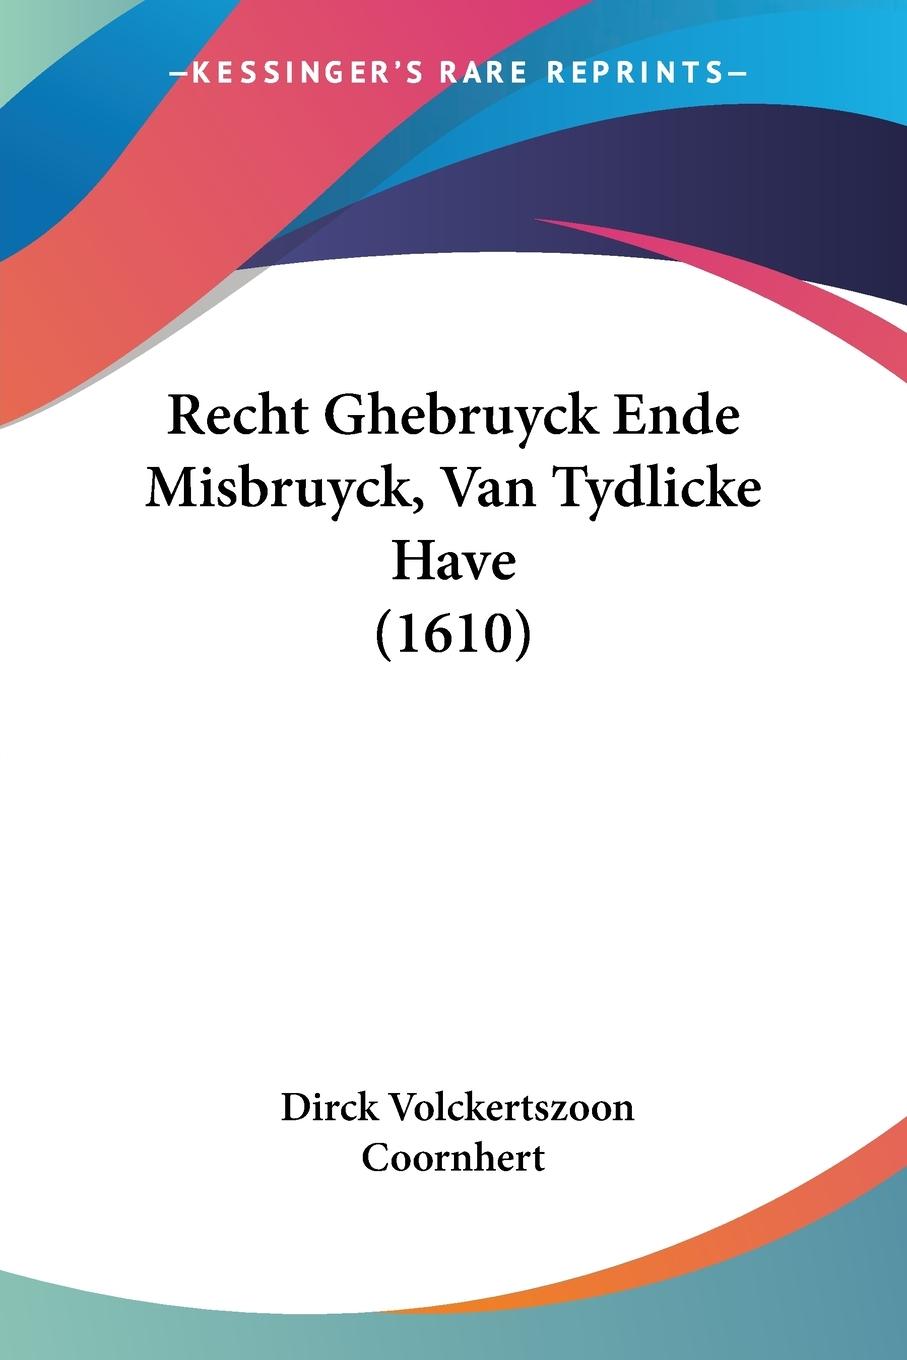 Recht Ghebruyck Ende Misbruyck, Van Tydlicke Have (1610) - Coornhert, Dirck Volckertszoon